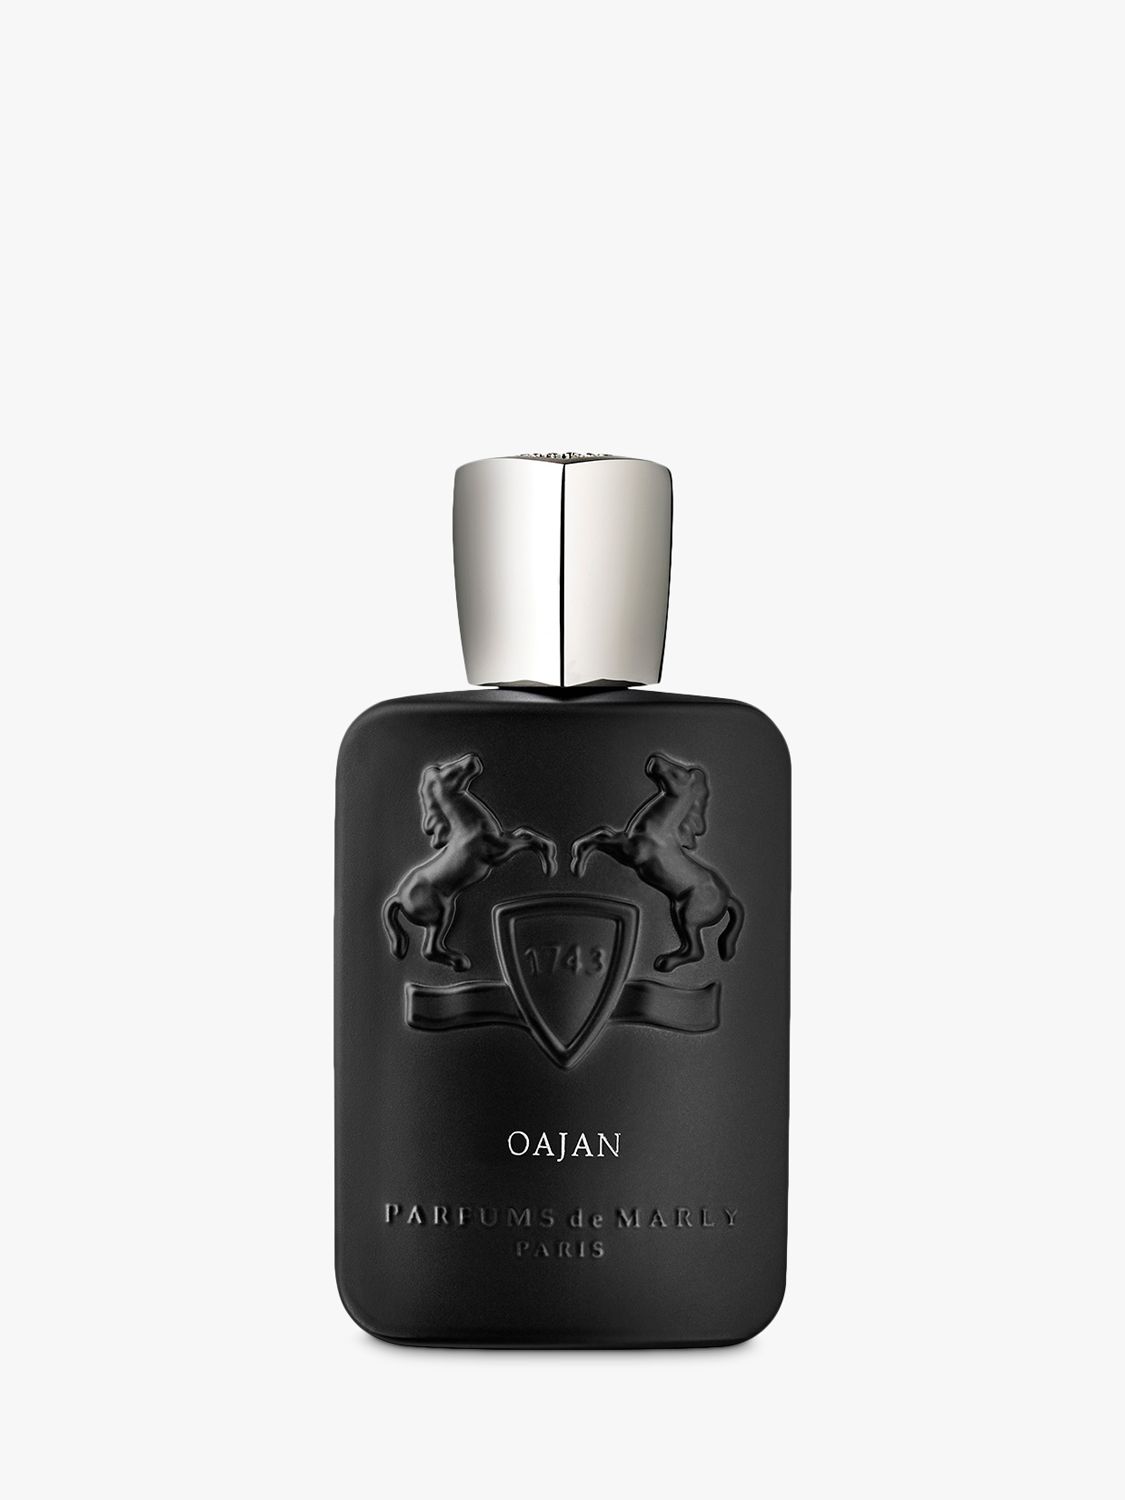 Parfums de Marly Oajan Eau de Parfum, 125ml 2